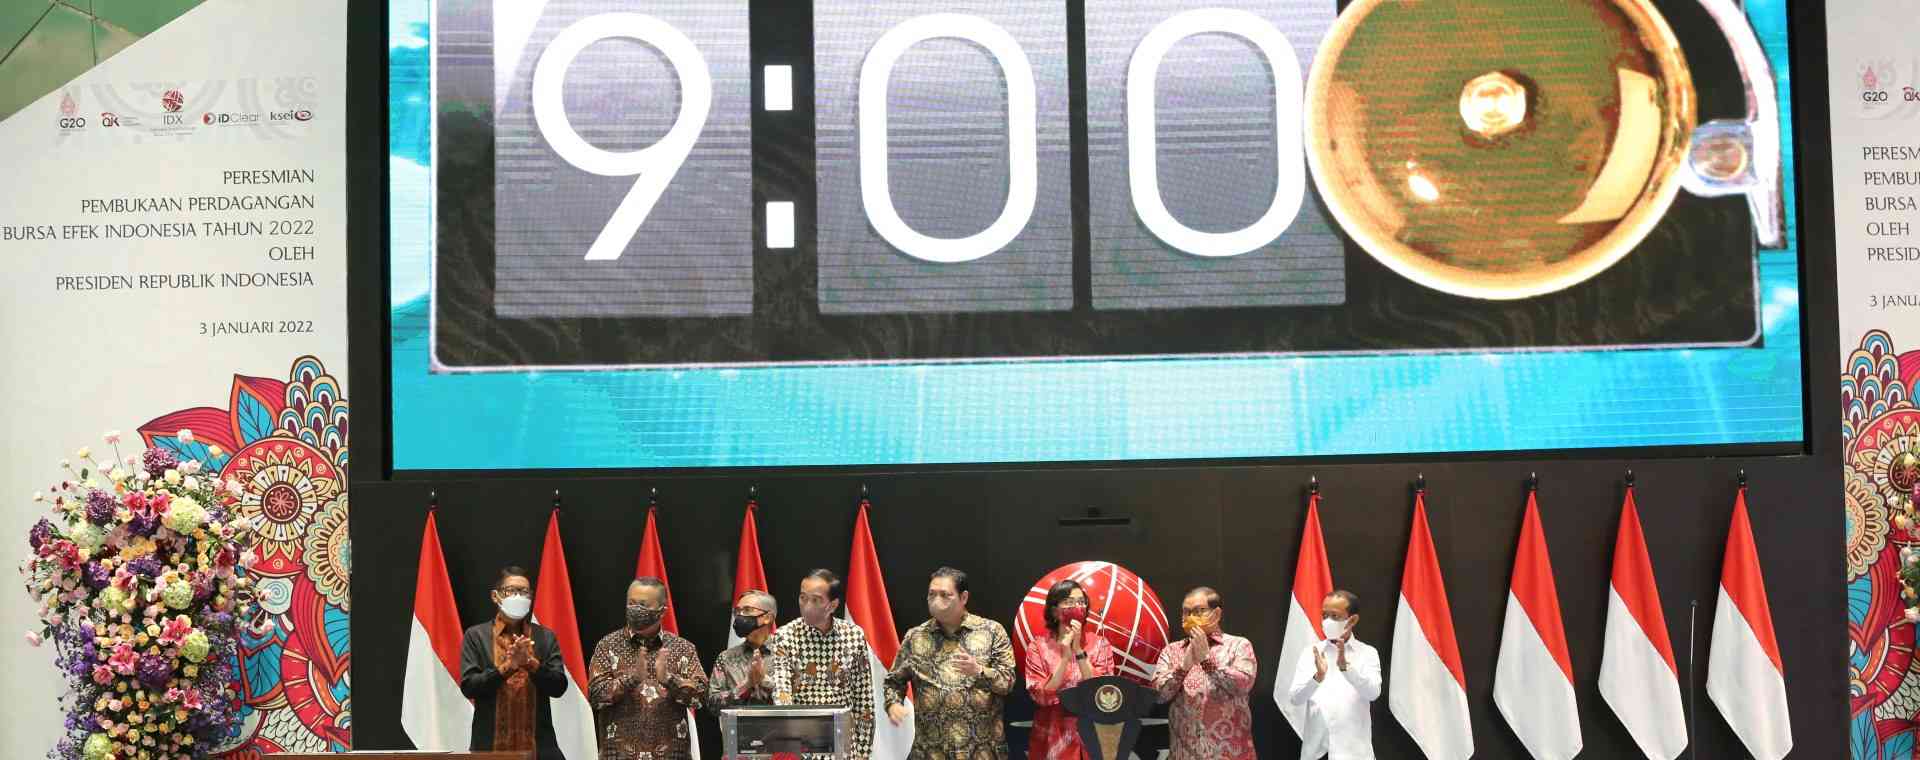 Presiden Joko Widodo (menekan tombol) didampingi oleh sejumlah menteri, Gubernur Bank Indonesia hingga Ketua Dewan Komisioner Otoritas Jasa Keuangan (OJK) membuka perdagangan saham perdana di 2022, pada hari ini, Senin (3/1/2022). - Istimewa. 